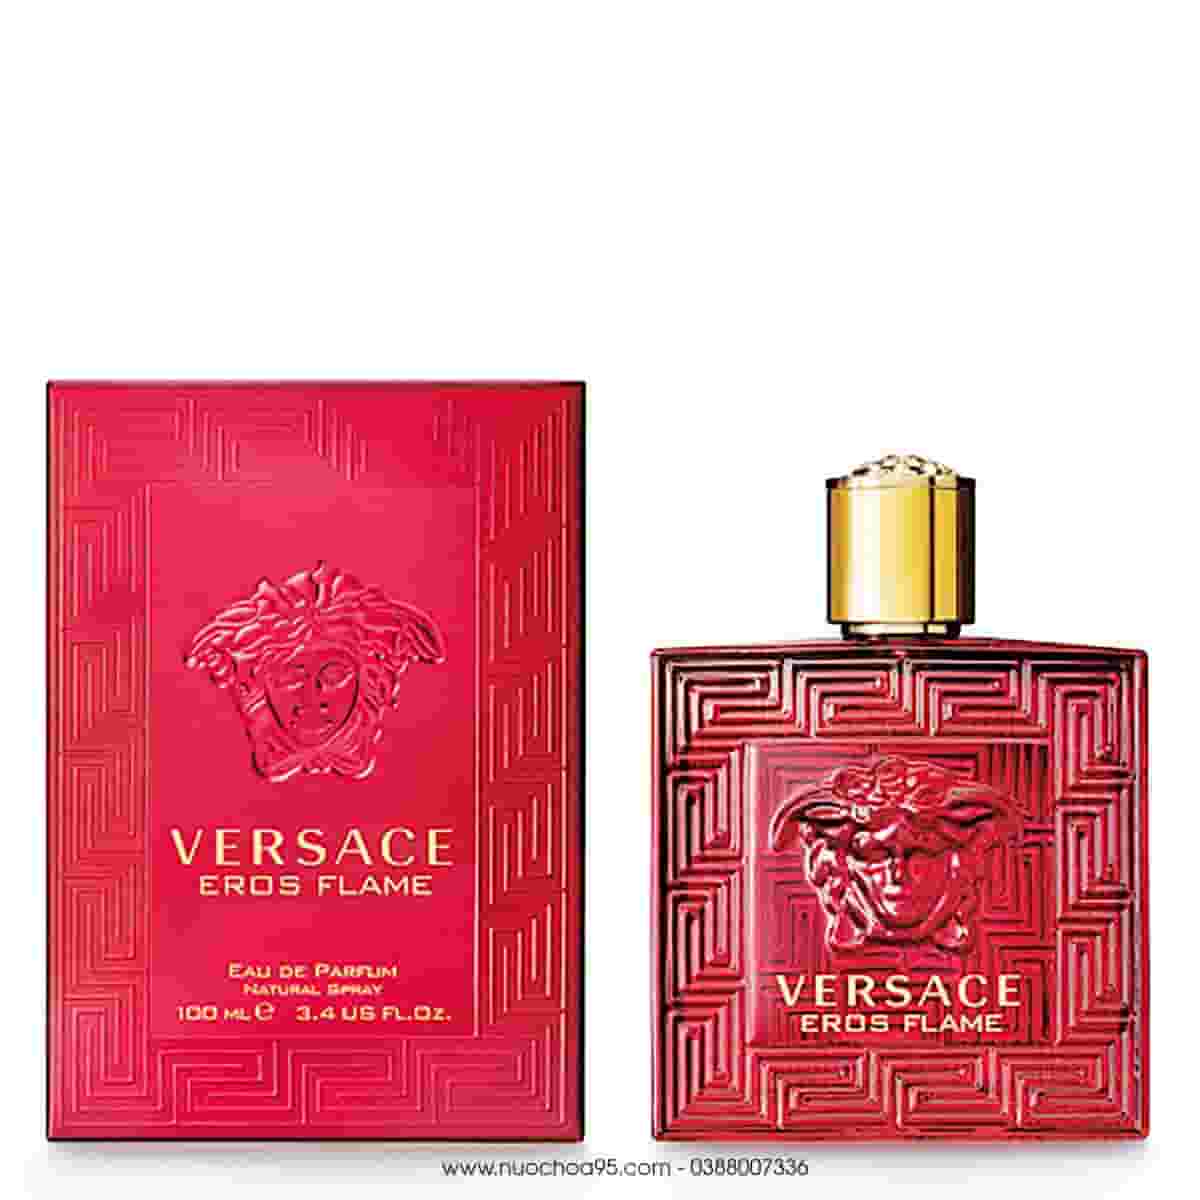 Nước hoa Versace Eros Flame